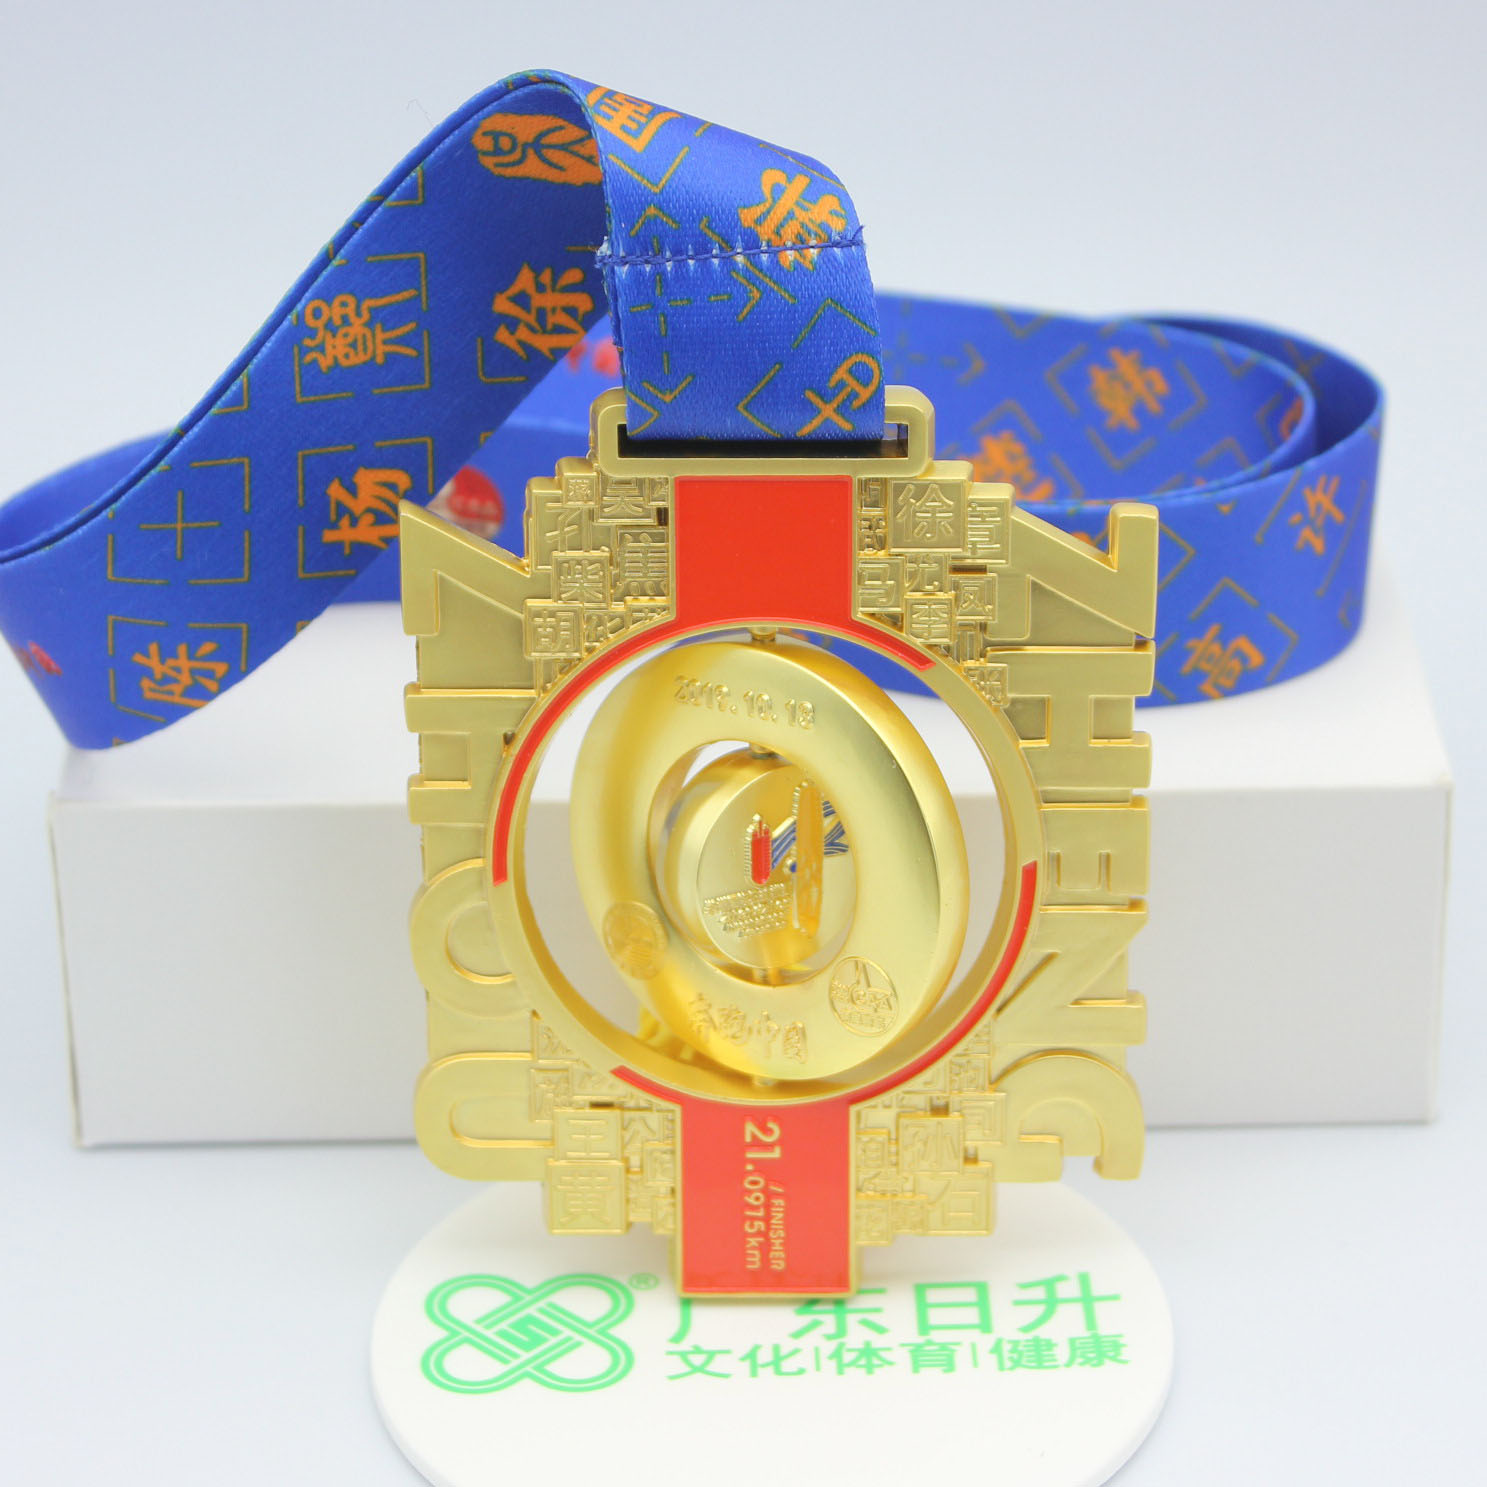 About Zhengzhou Marathon Medal Design Idea news 图1张